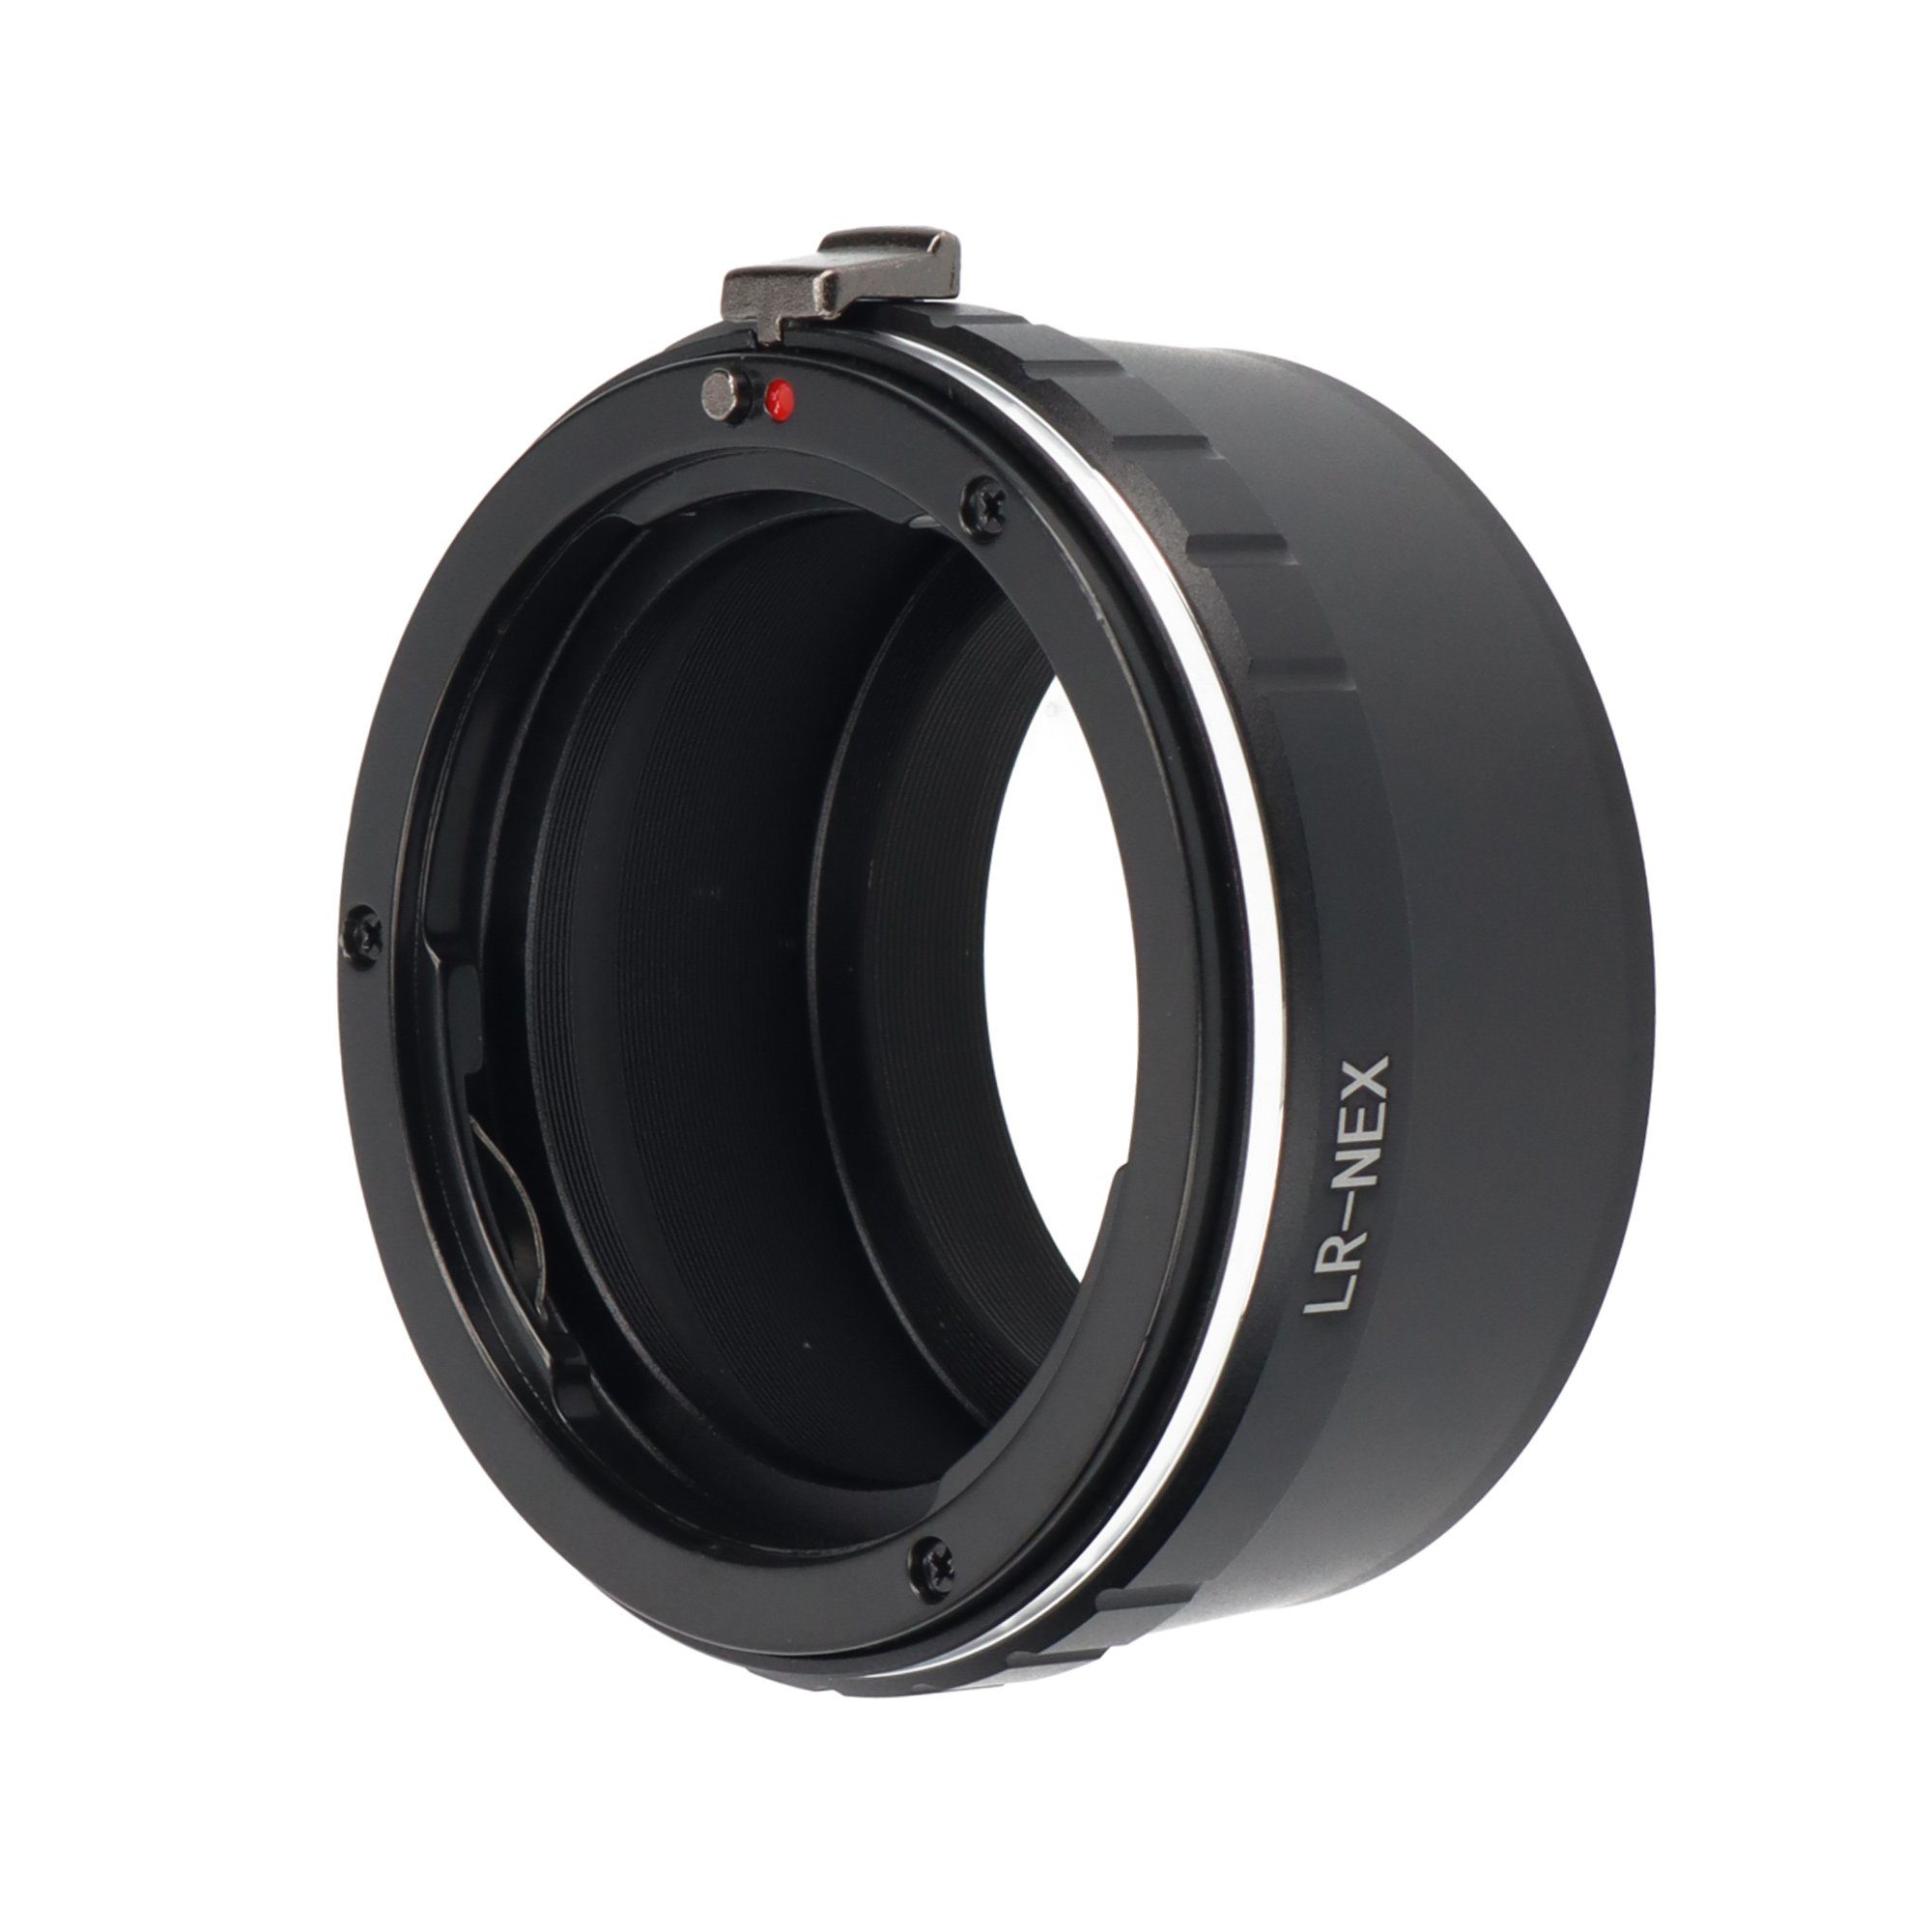 ayex Adapter für Leica R Objektive an Sony E-Mount Kameras Objektiveadapter